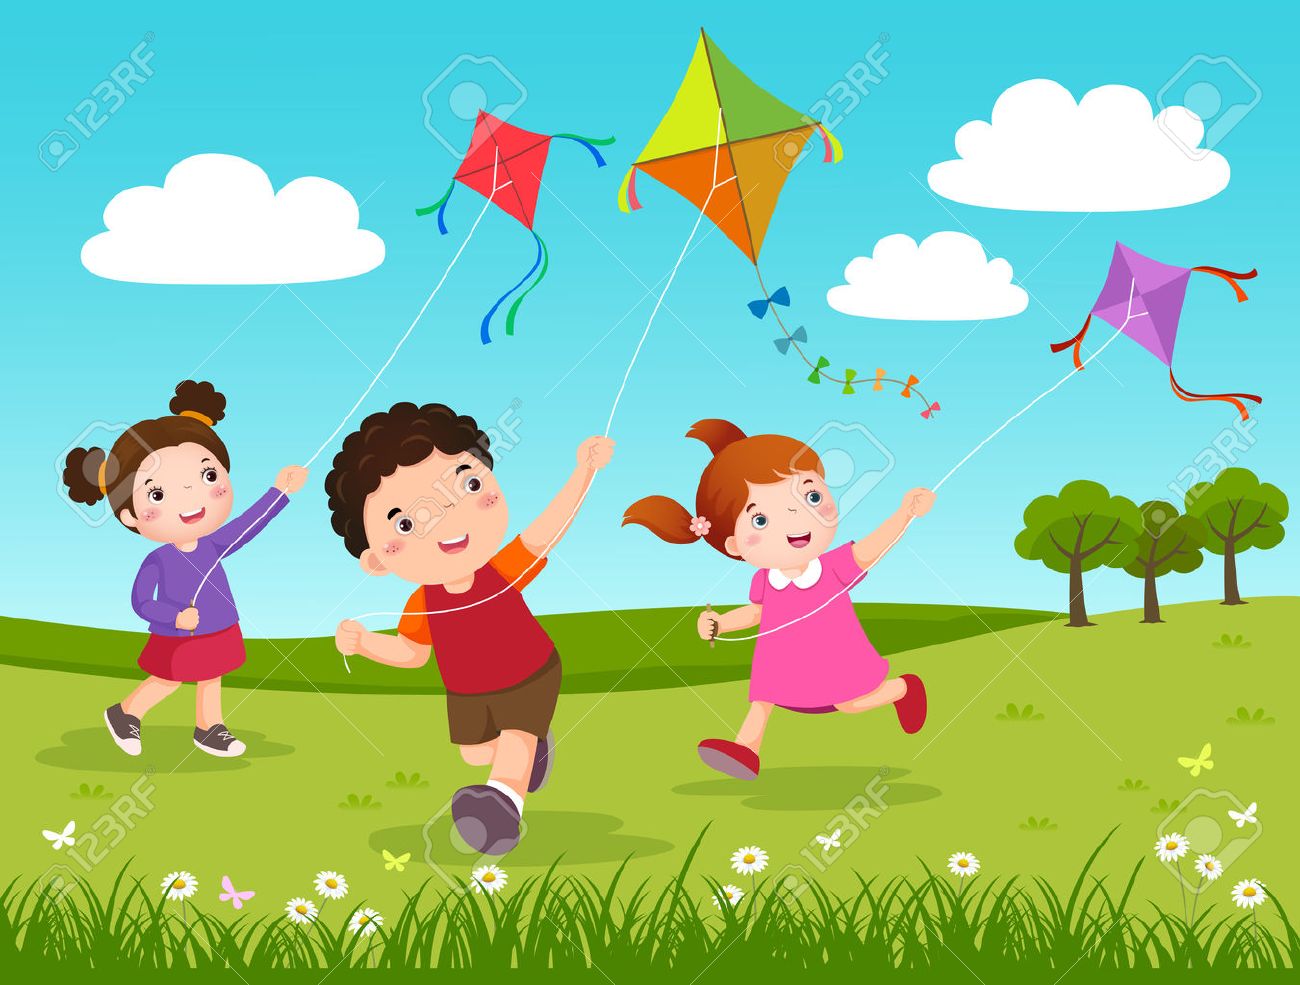 Kids flying kites.